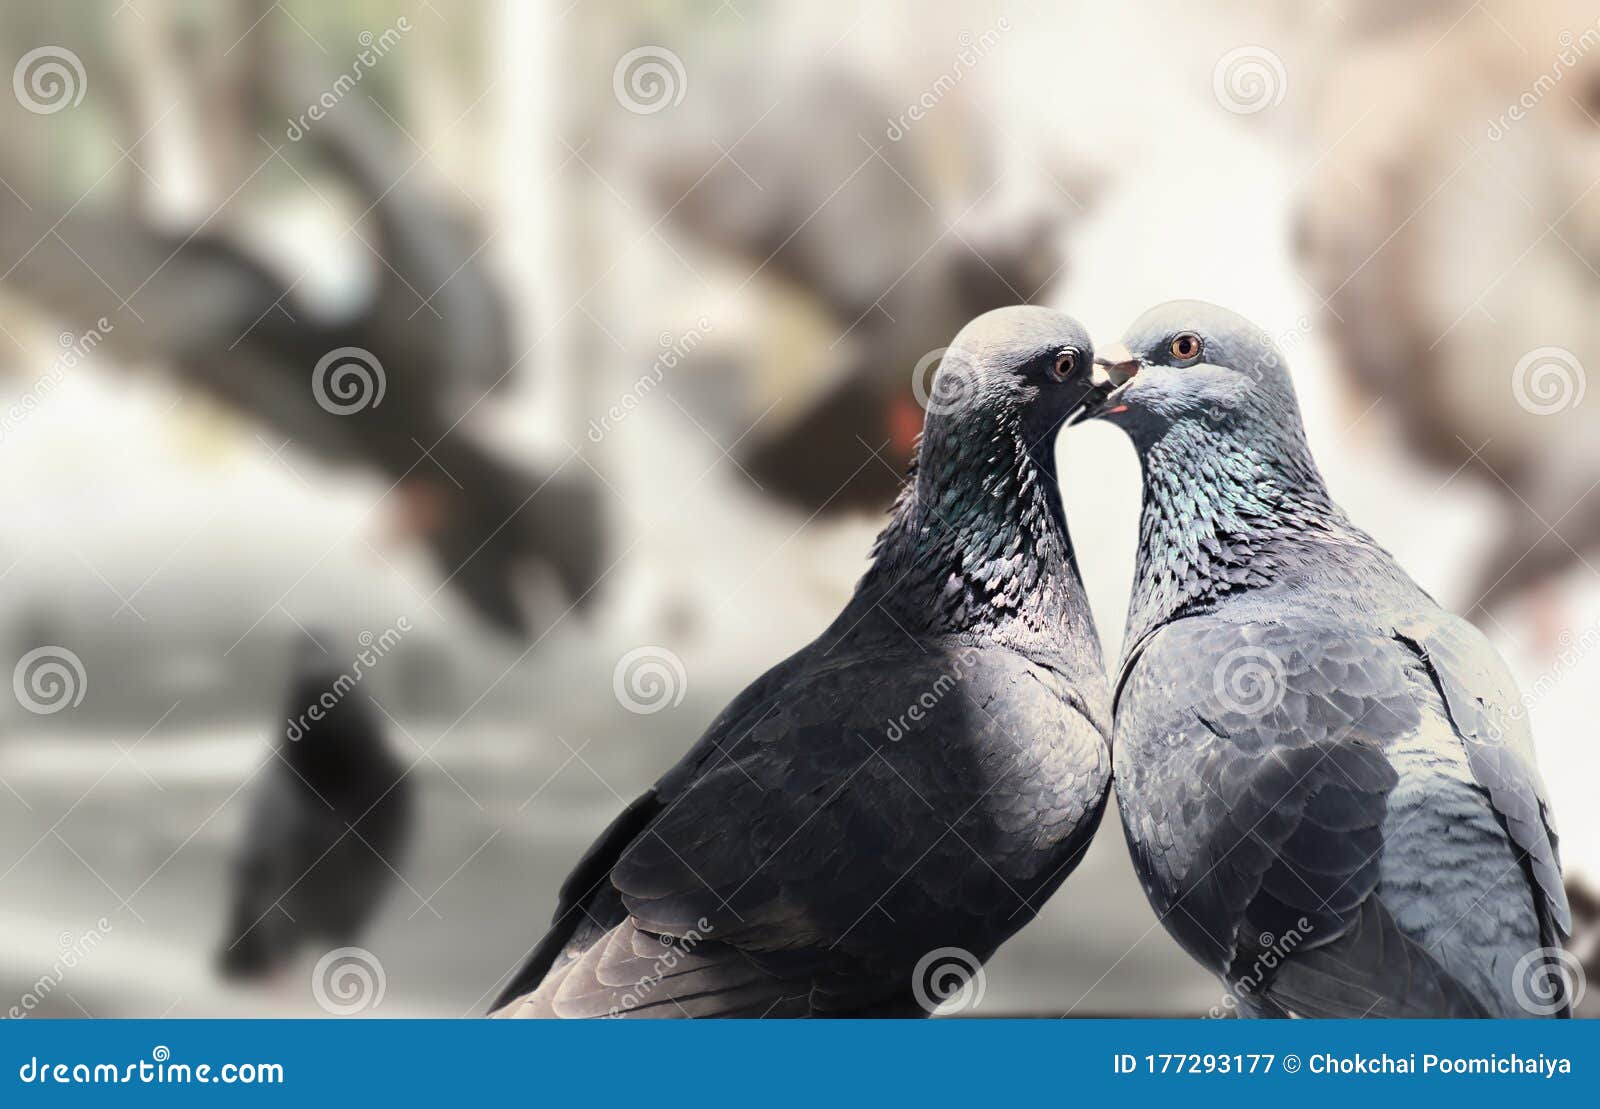 Gorgeous Love Birds Pigeons Stock Image - Image of fluffy, bird ...